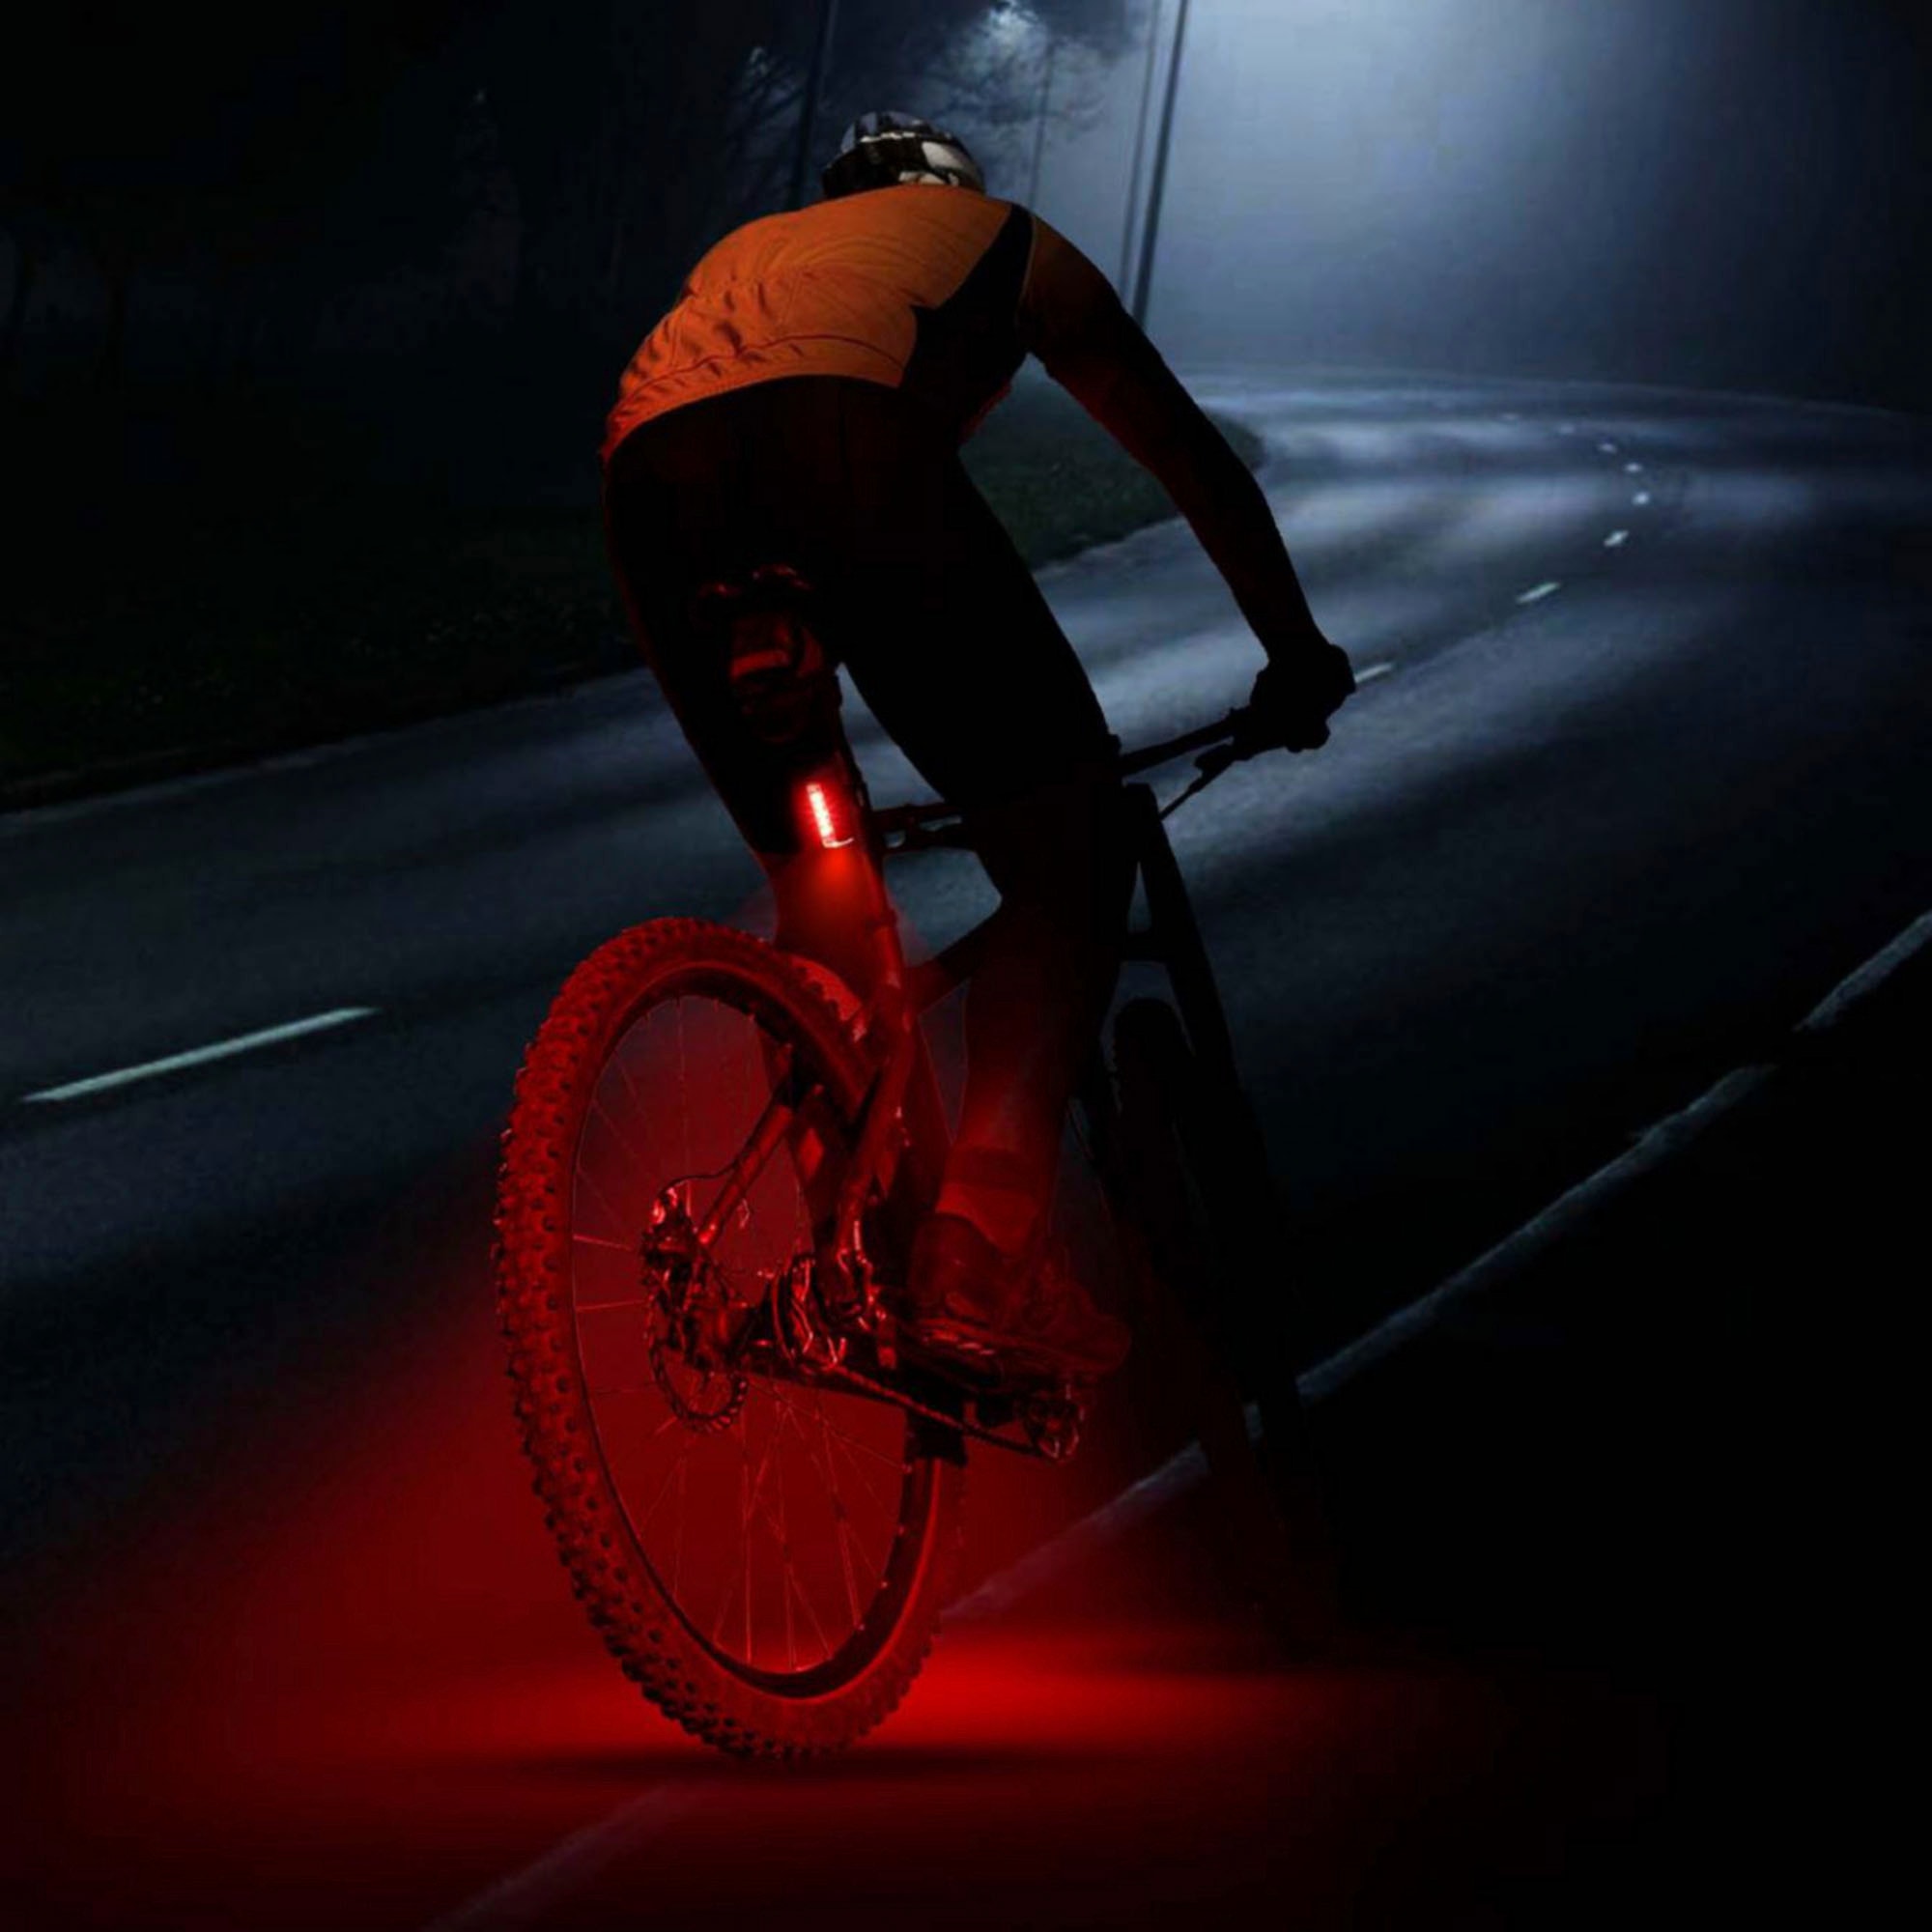 Buy FISCHER FAHRRAD Bike light set PLUS 100/130 Fernlicht + TWIN STOP LED  (monochrome) Black